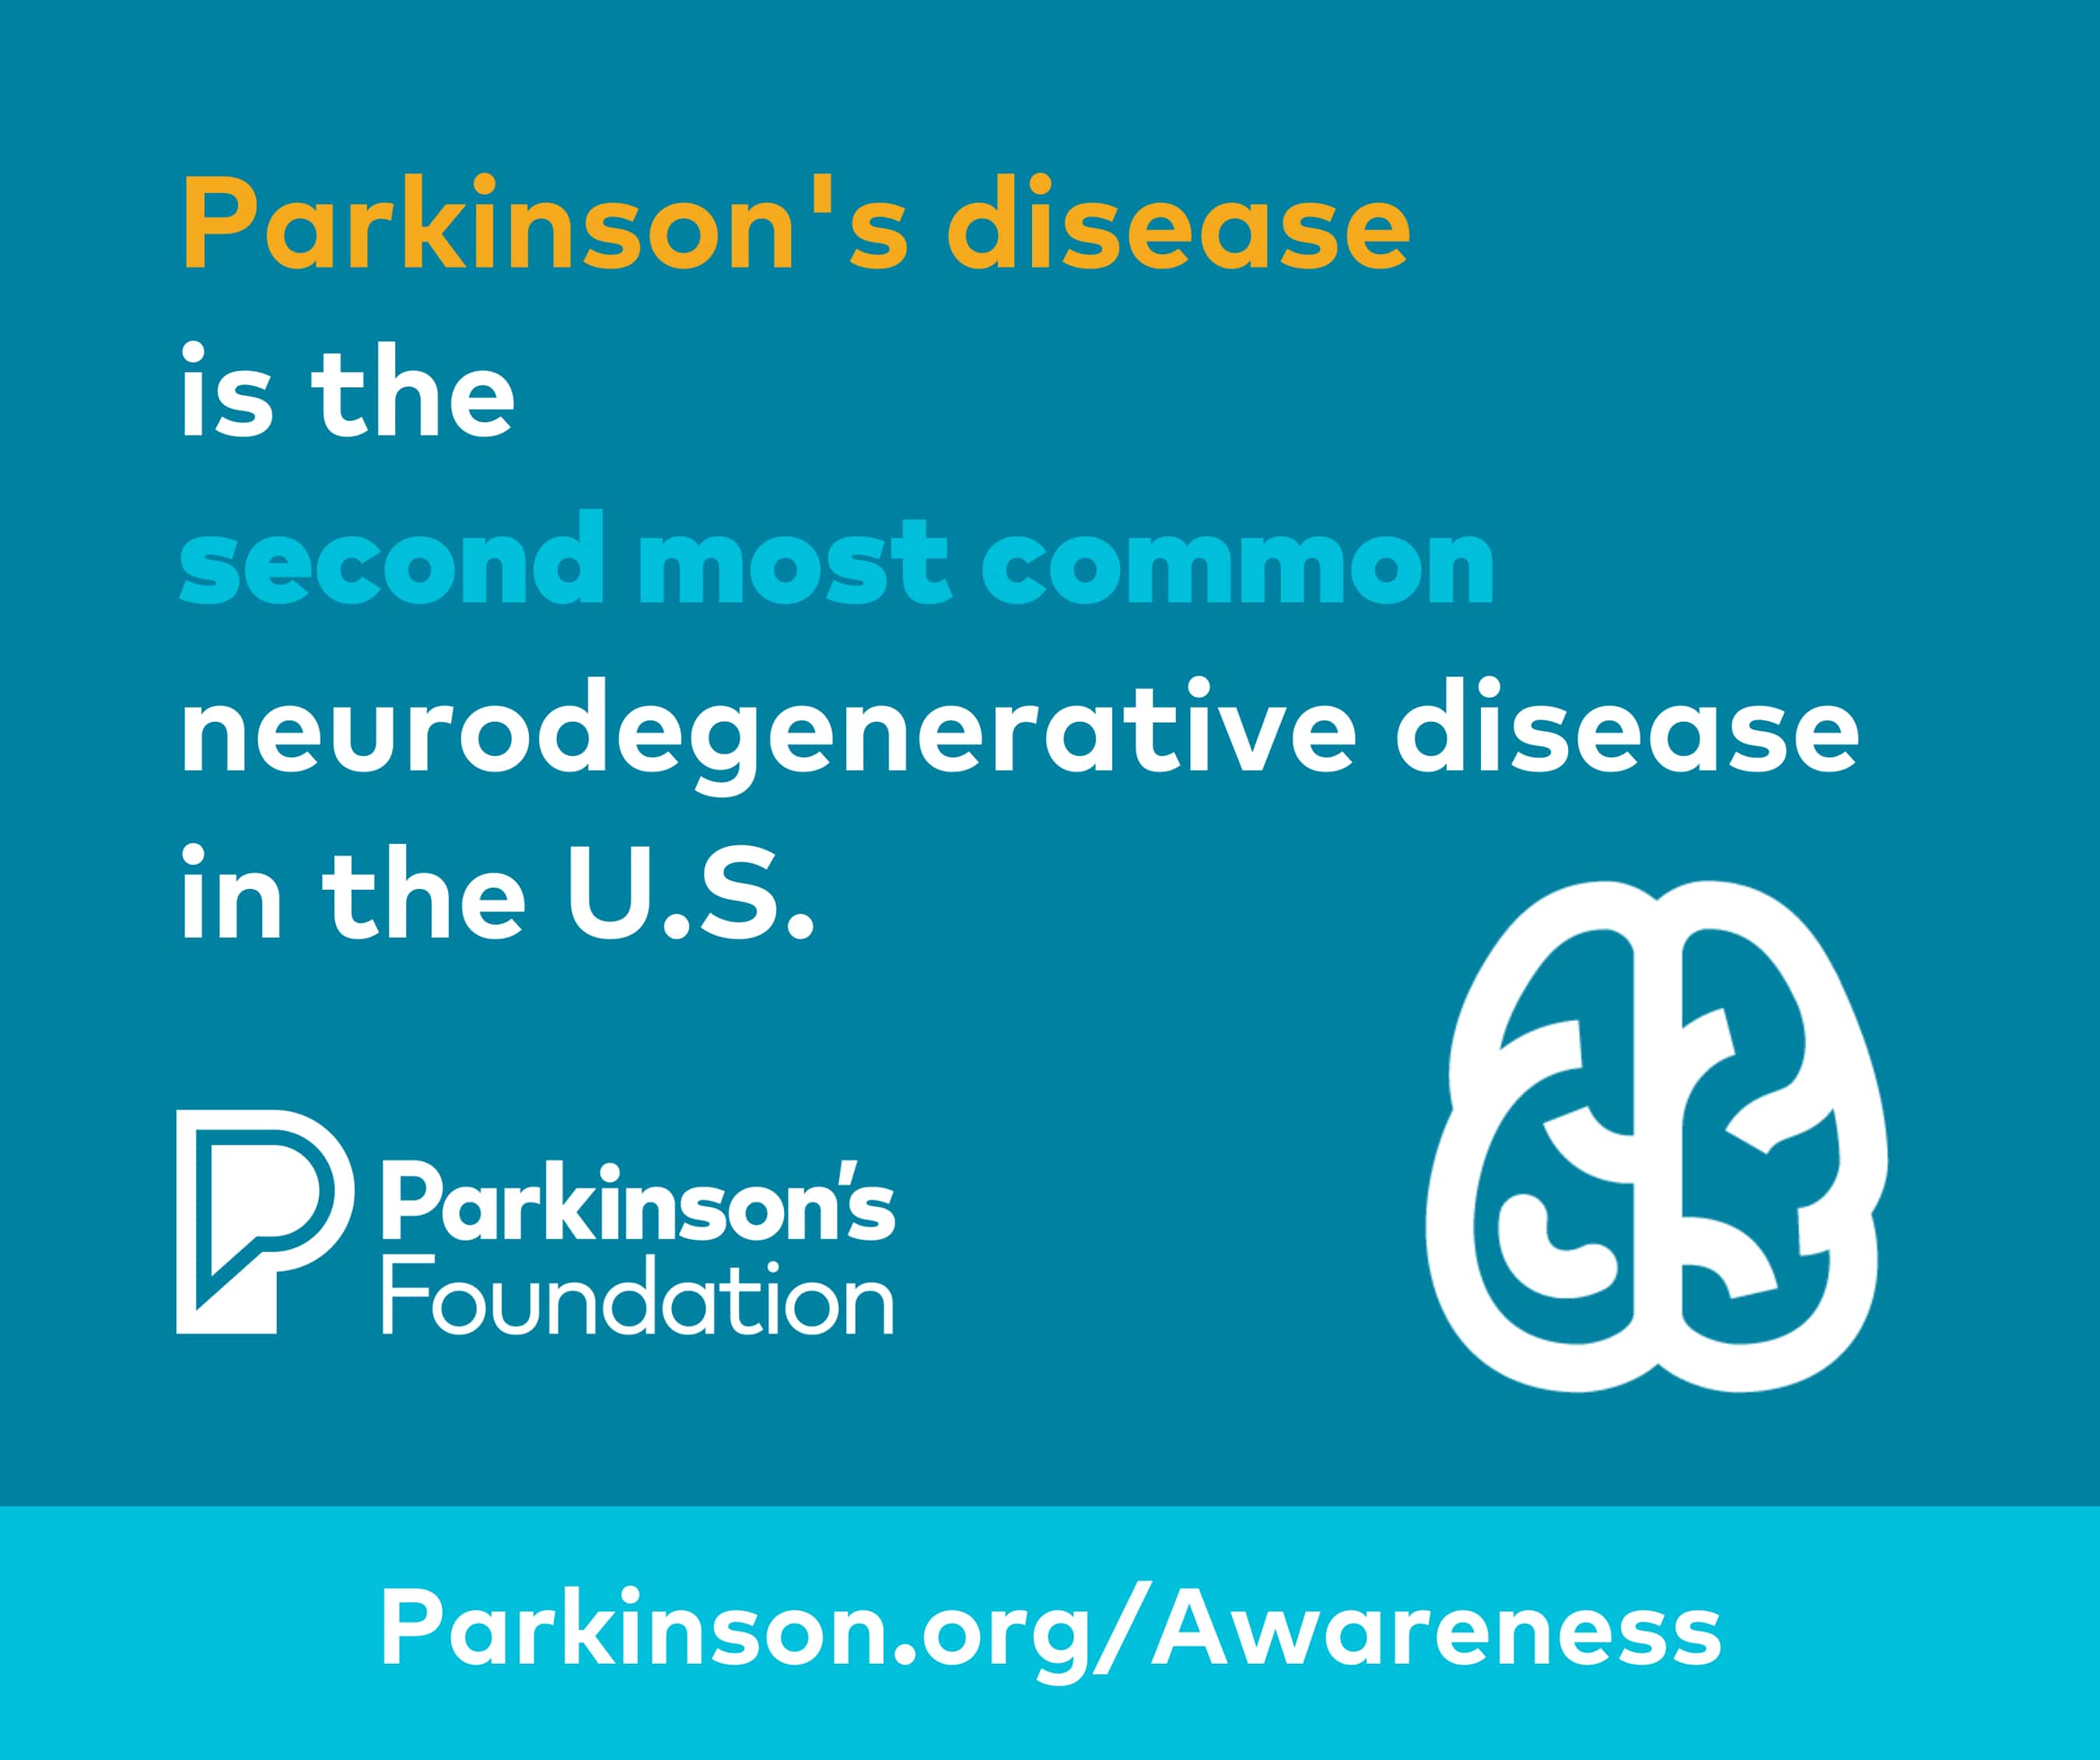 Parkinson’s disease is the second most common neurodegenerative disease in the U.S.